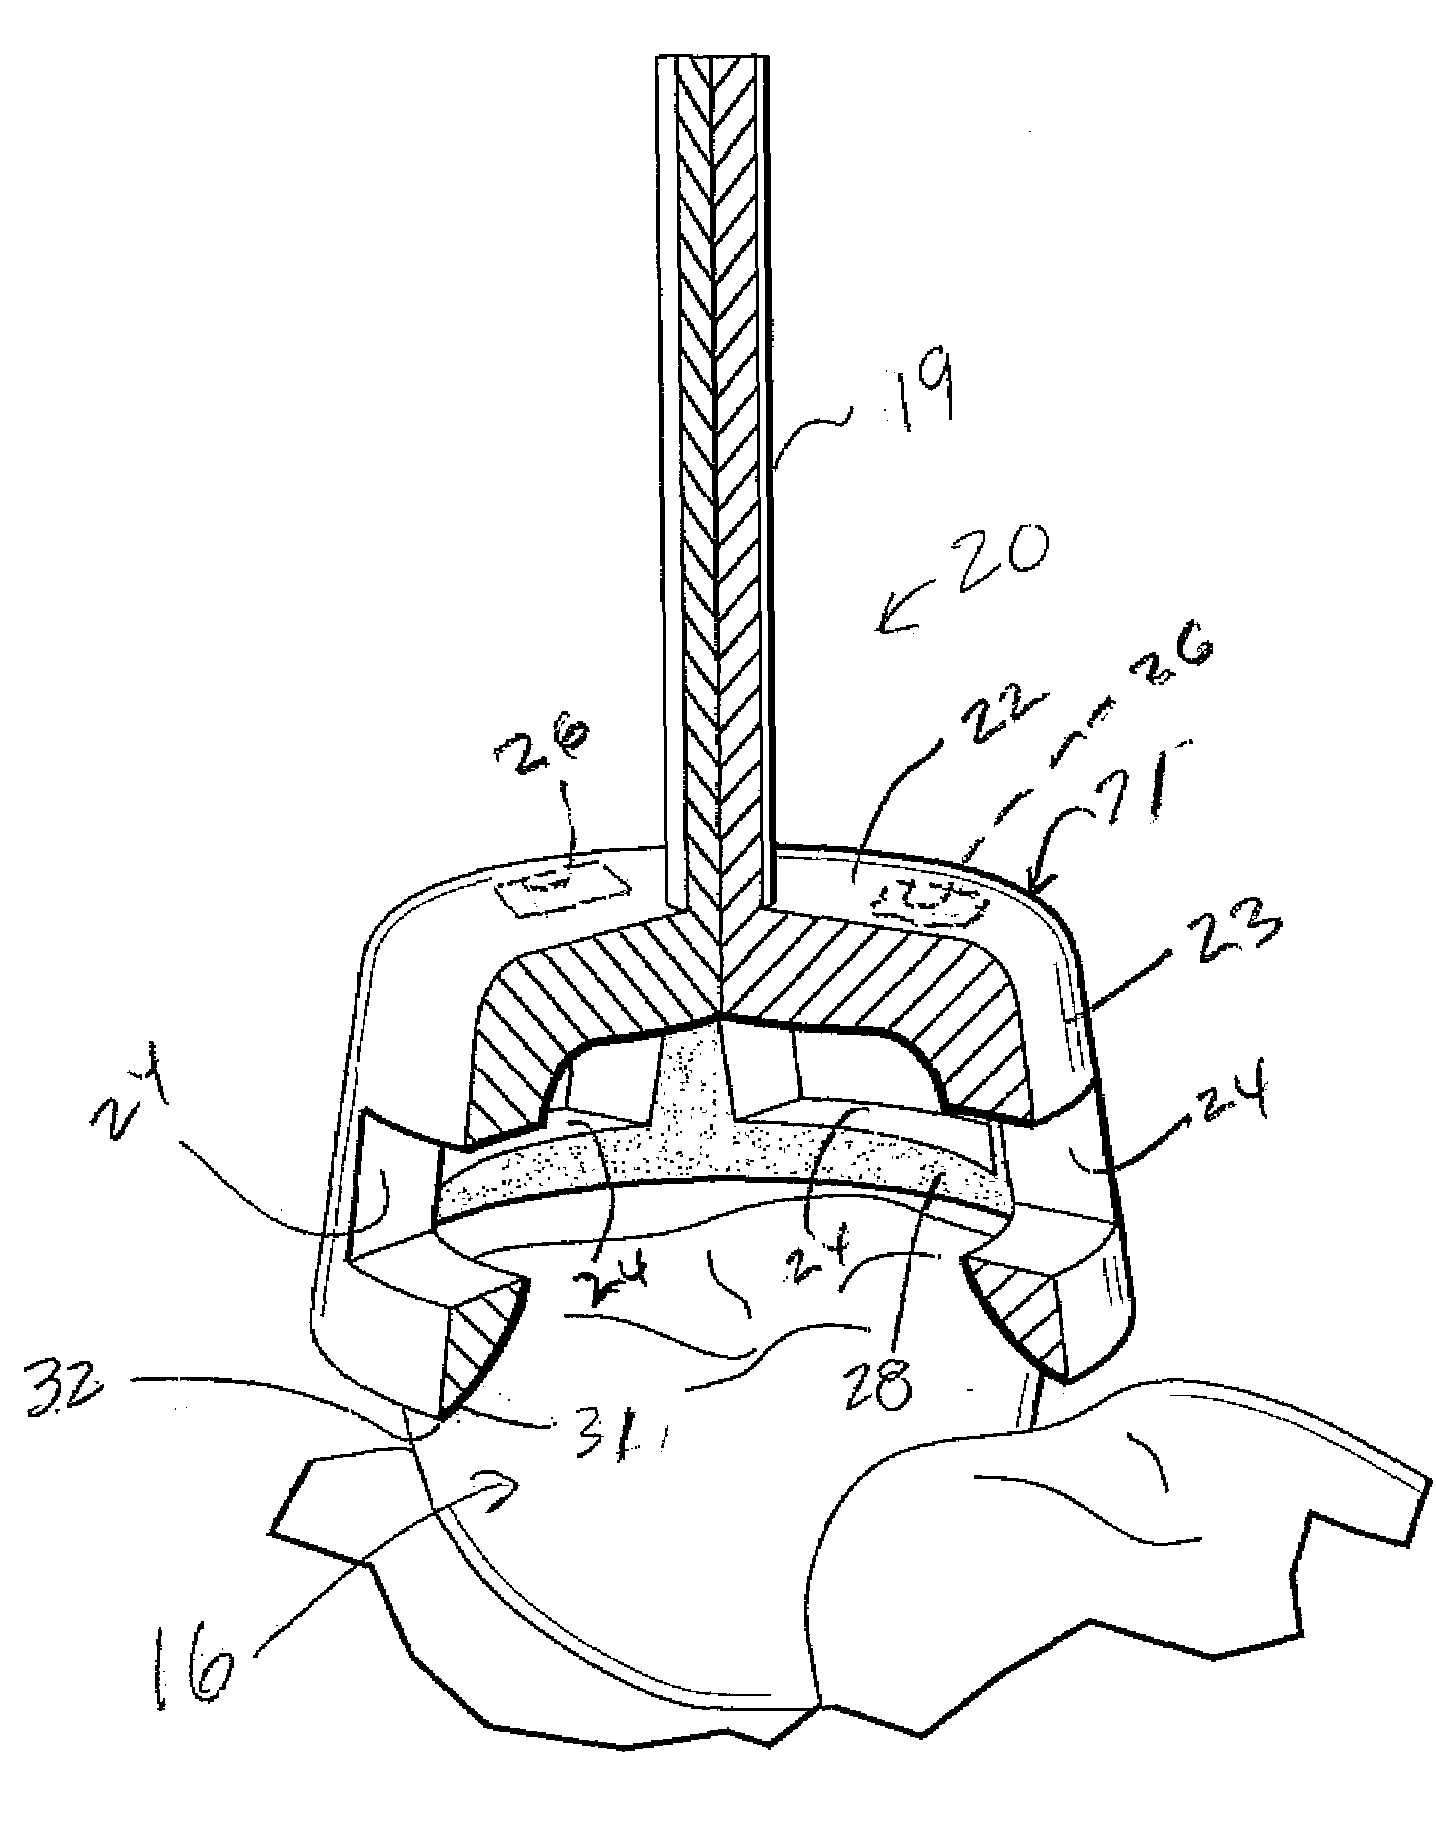 Truncated cone-shaped dental drill burr, measurement gauge and gingival cord applicator for dental crown preparation